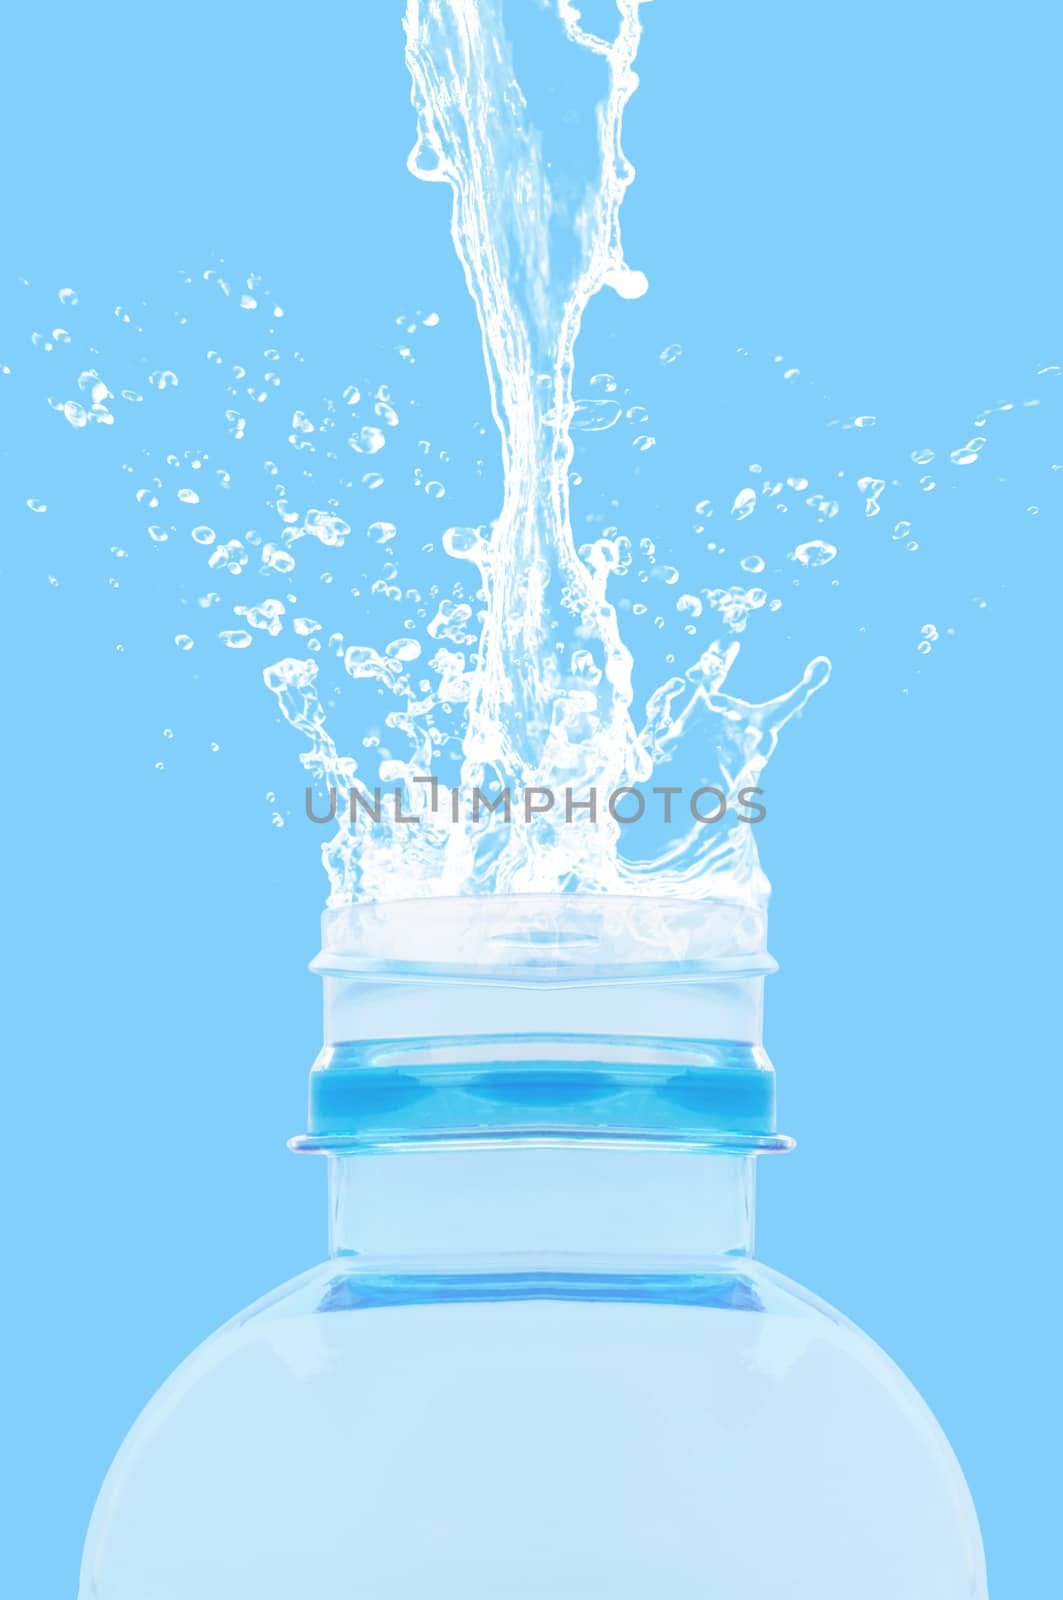 Water splash on bottle, freshness concept on blue background